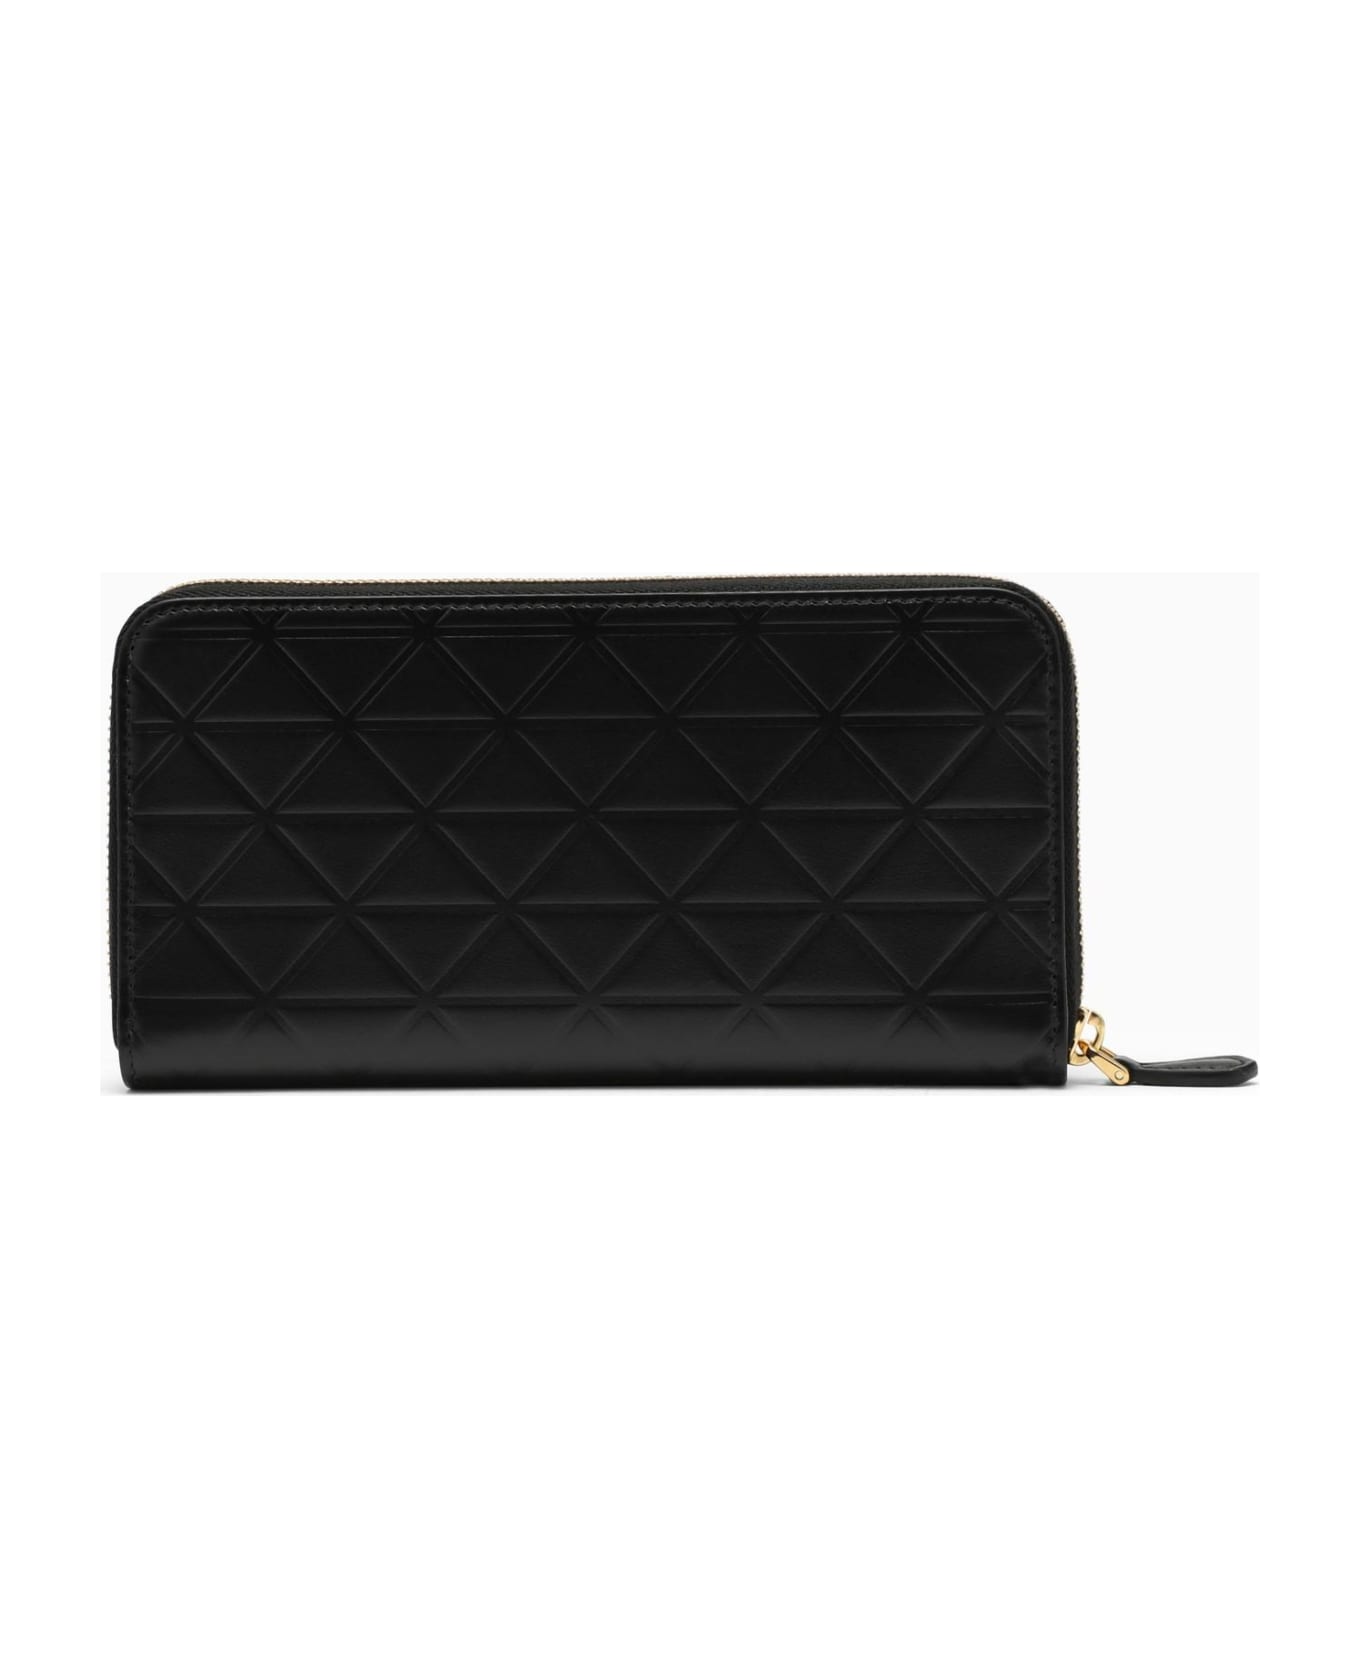 Prada Black Leather Zip-around Wallet - Nero